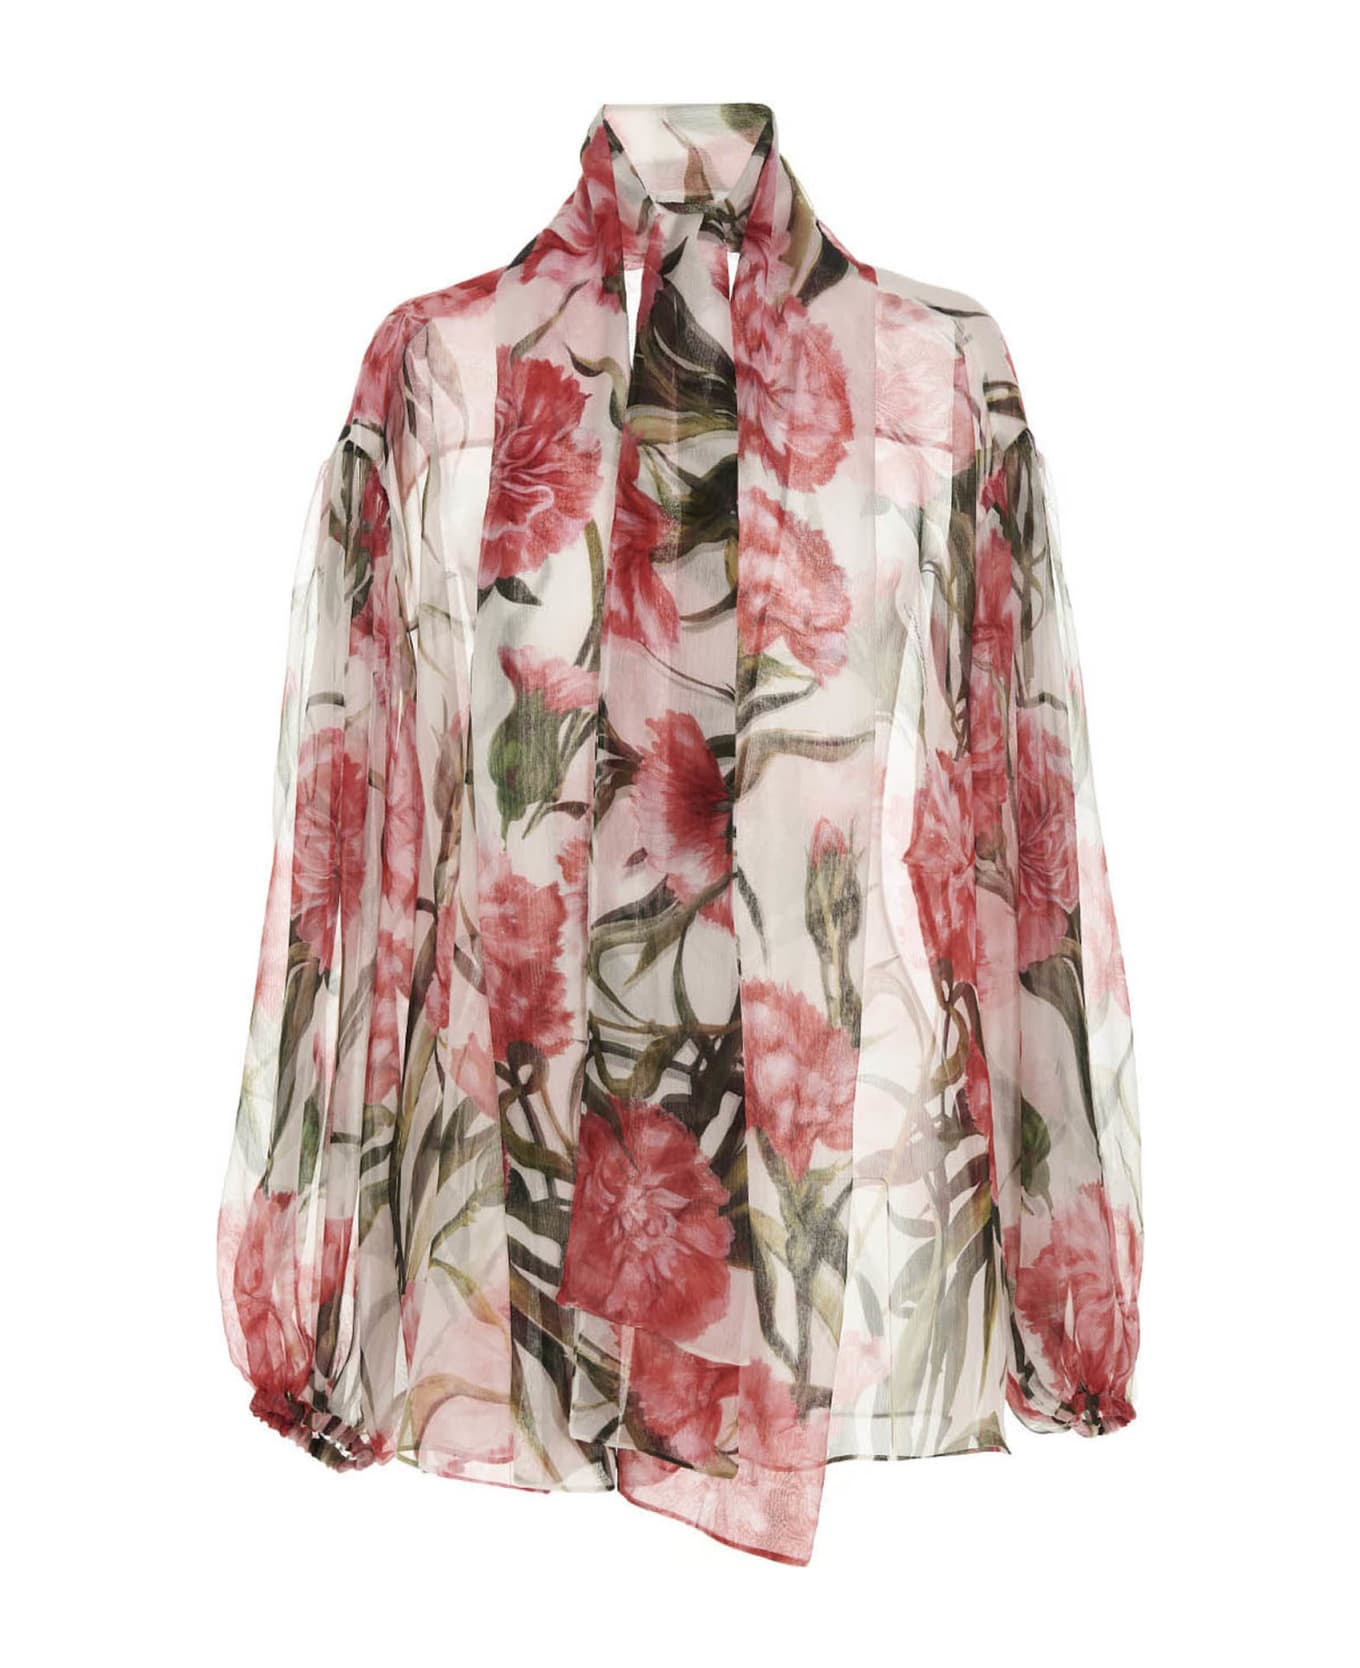 Dolce & Gabbana Carnation Chiffon Shirt - Vl Bco Rosso